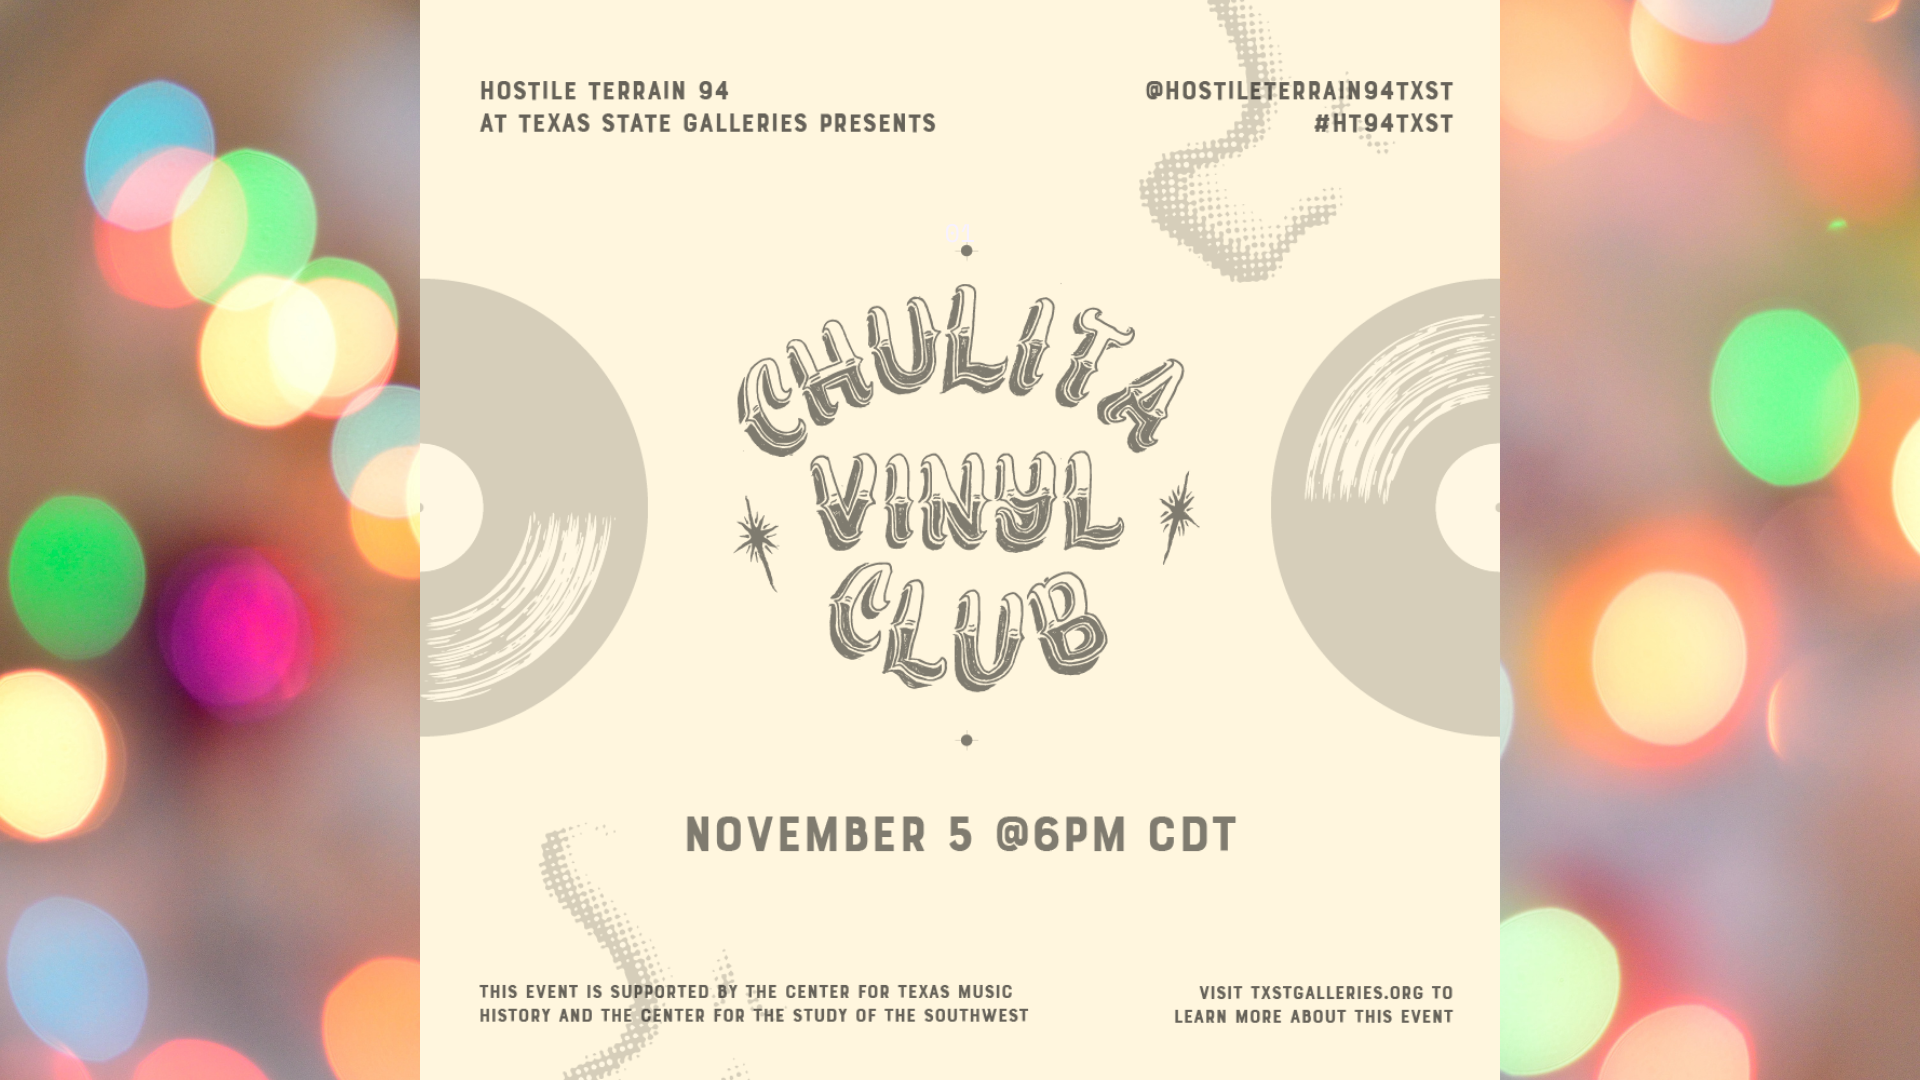 Chulita Vinyl Club event